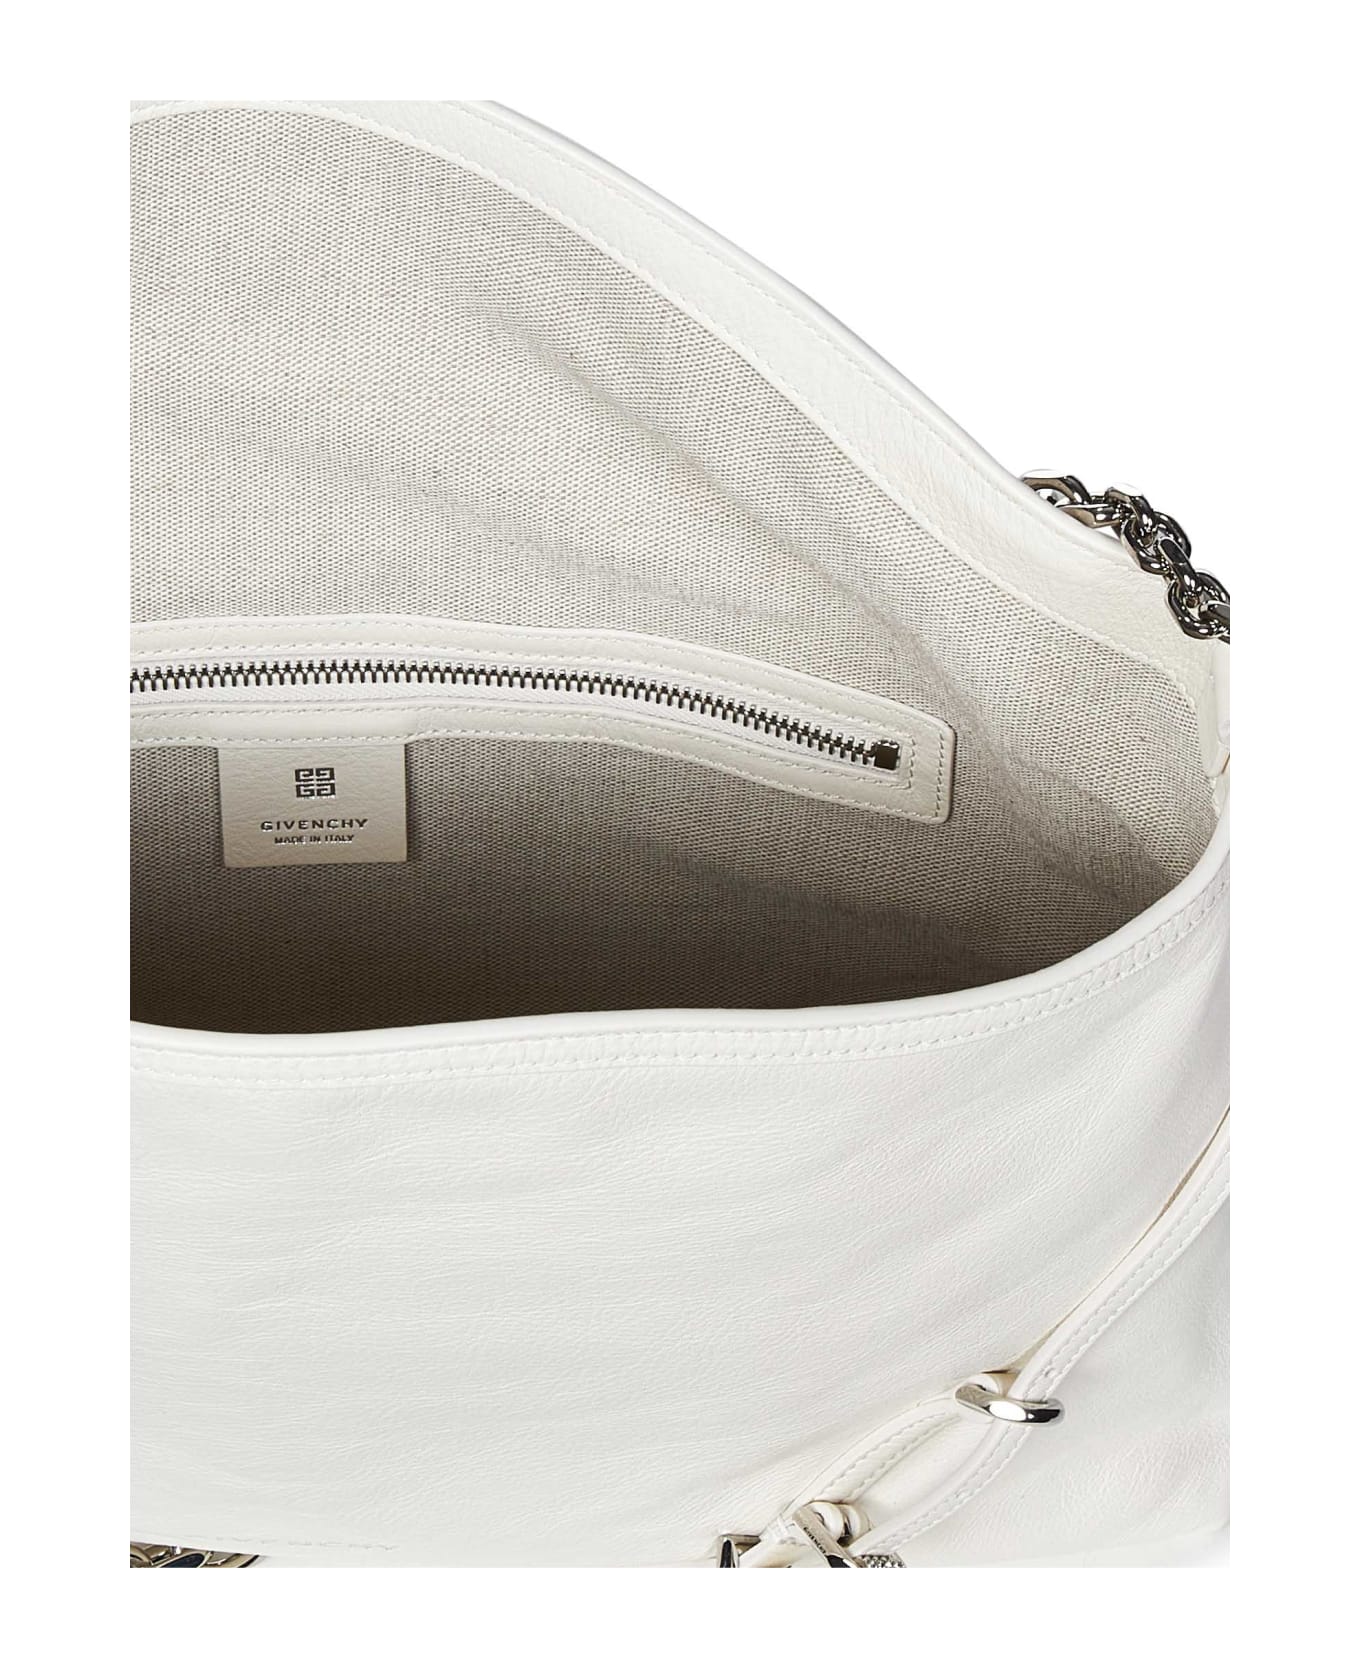 Givenchy Voyou Chain Medium Shoulder Bag - White